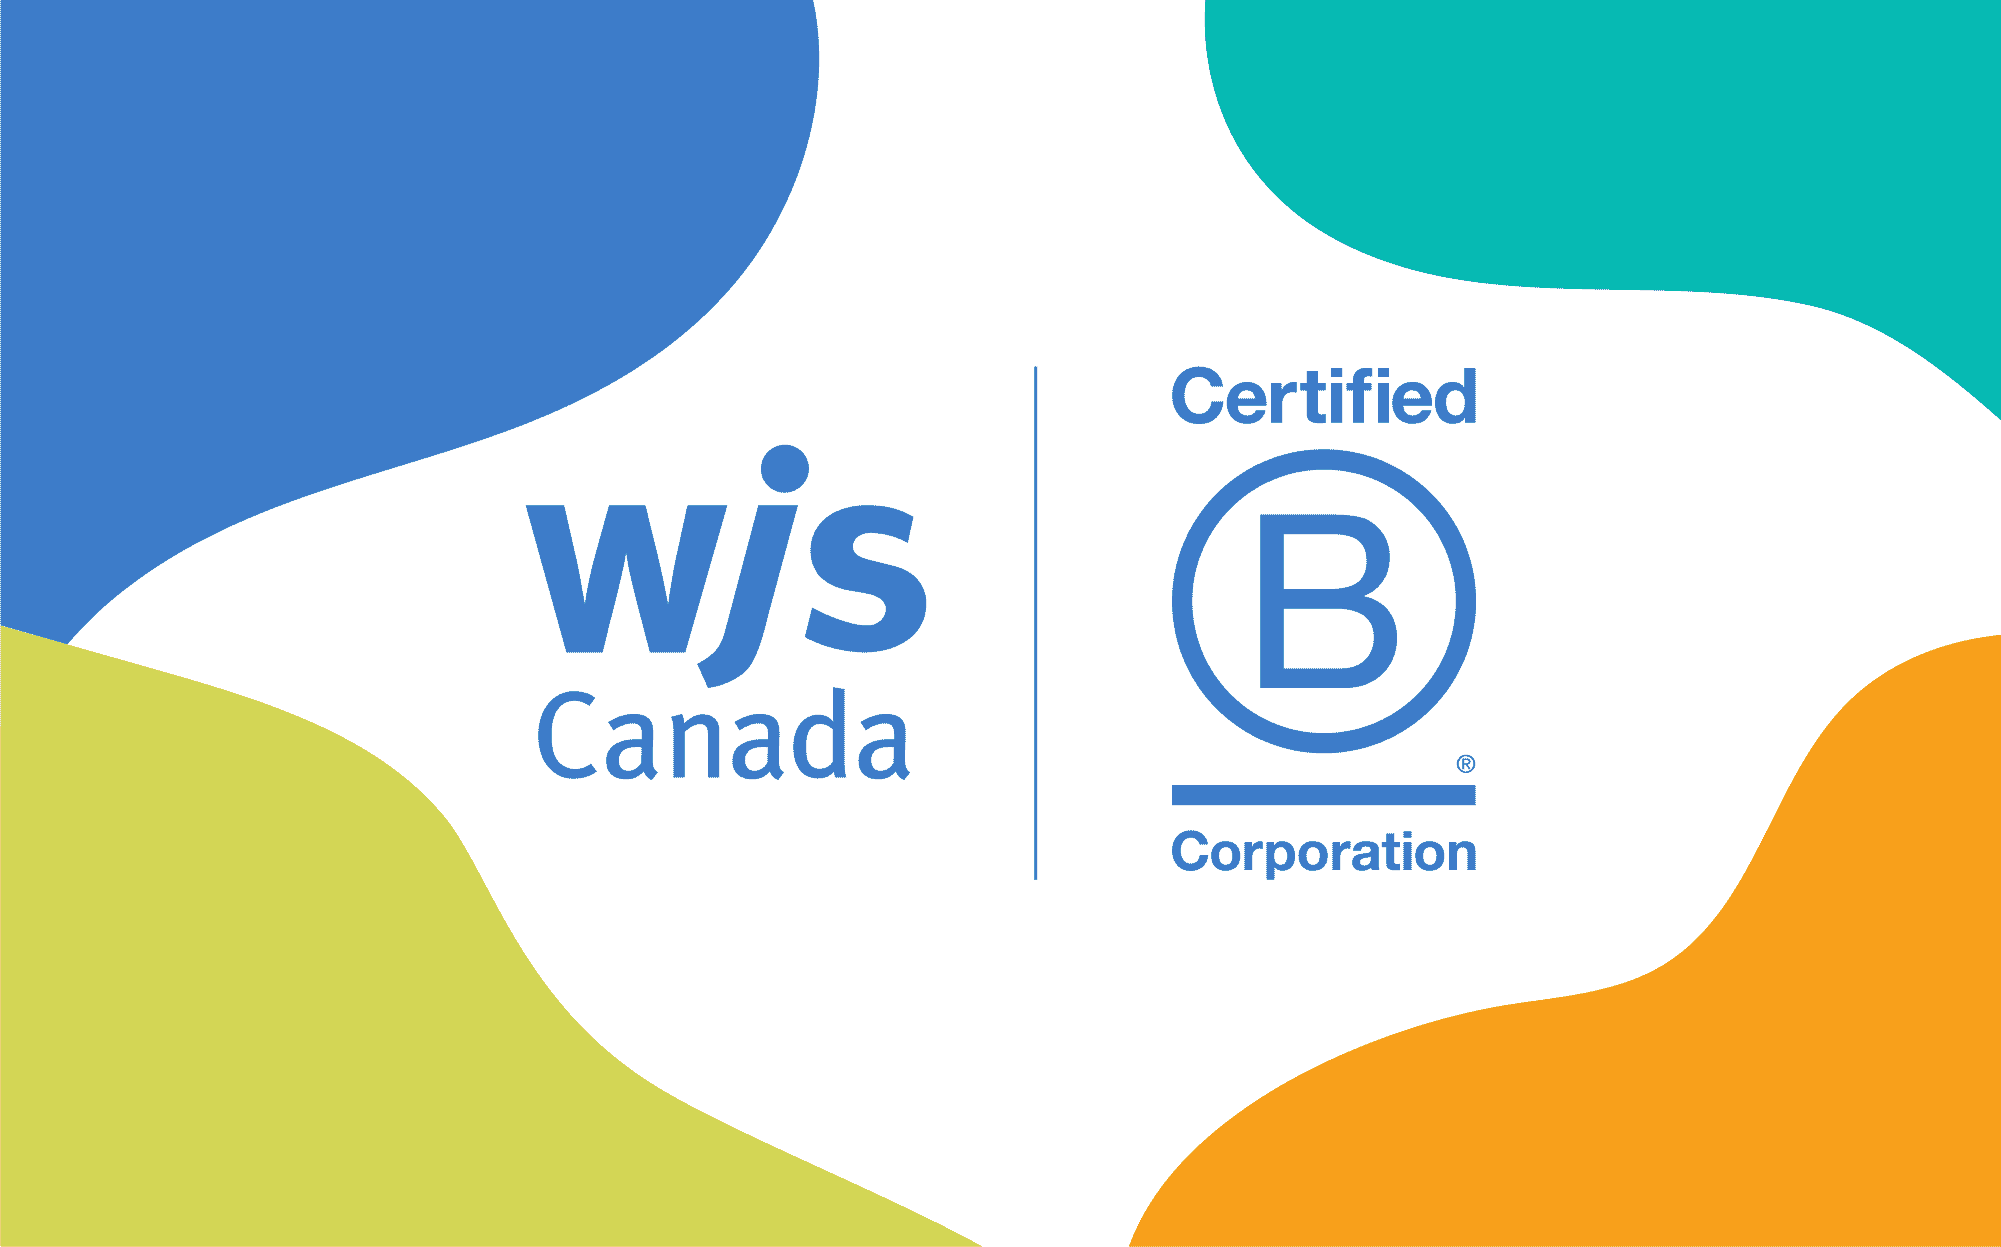 WJS and B Corp Logos